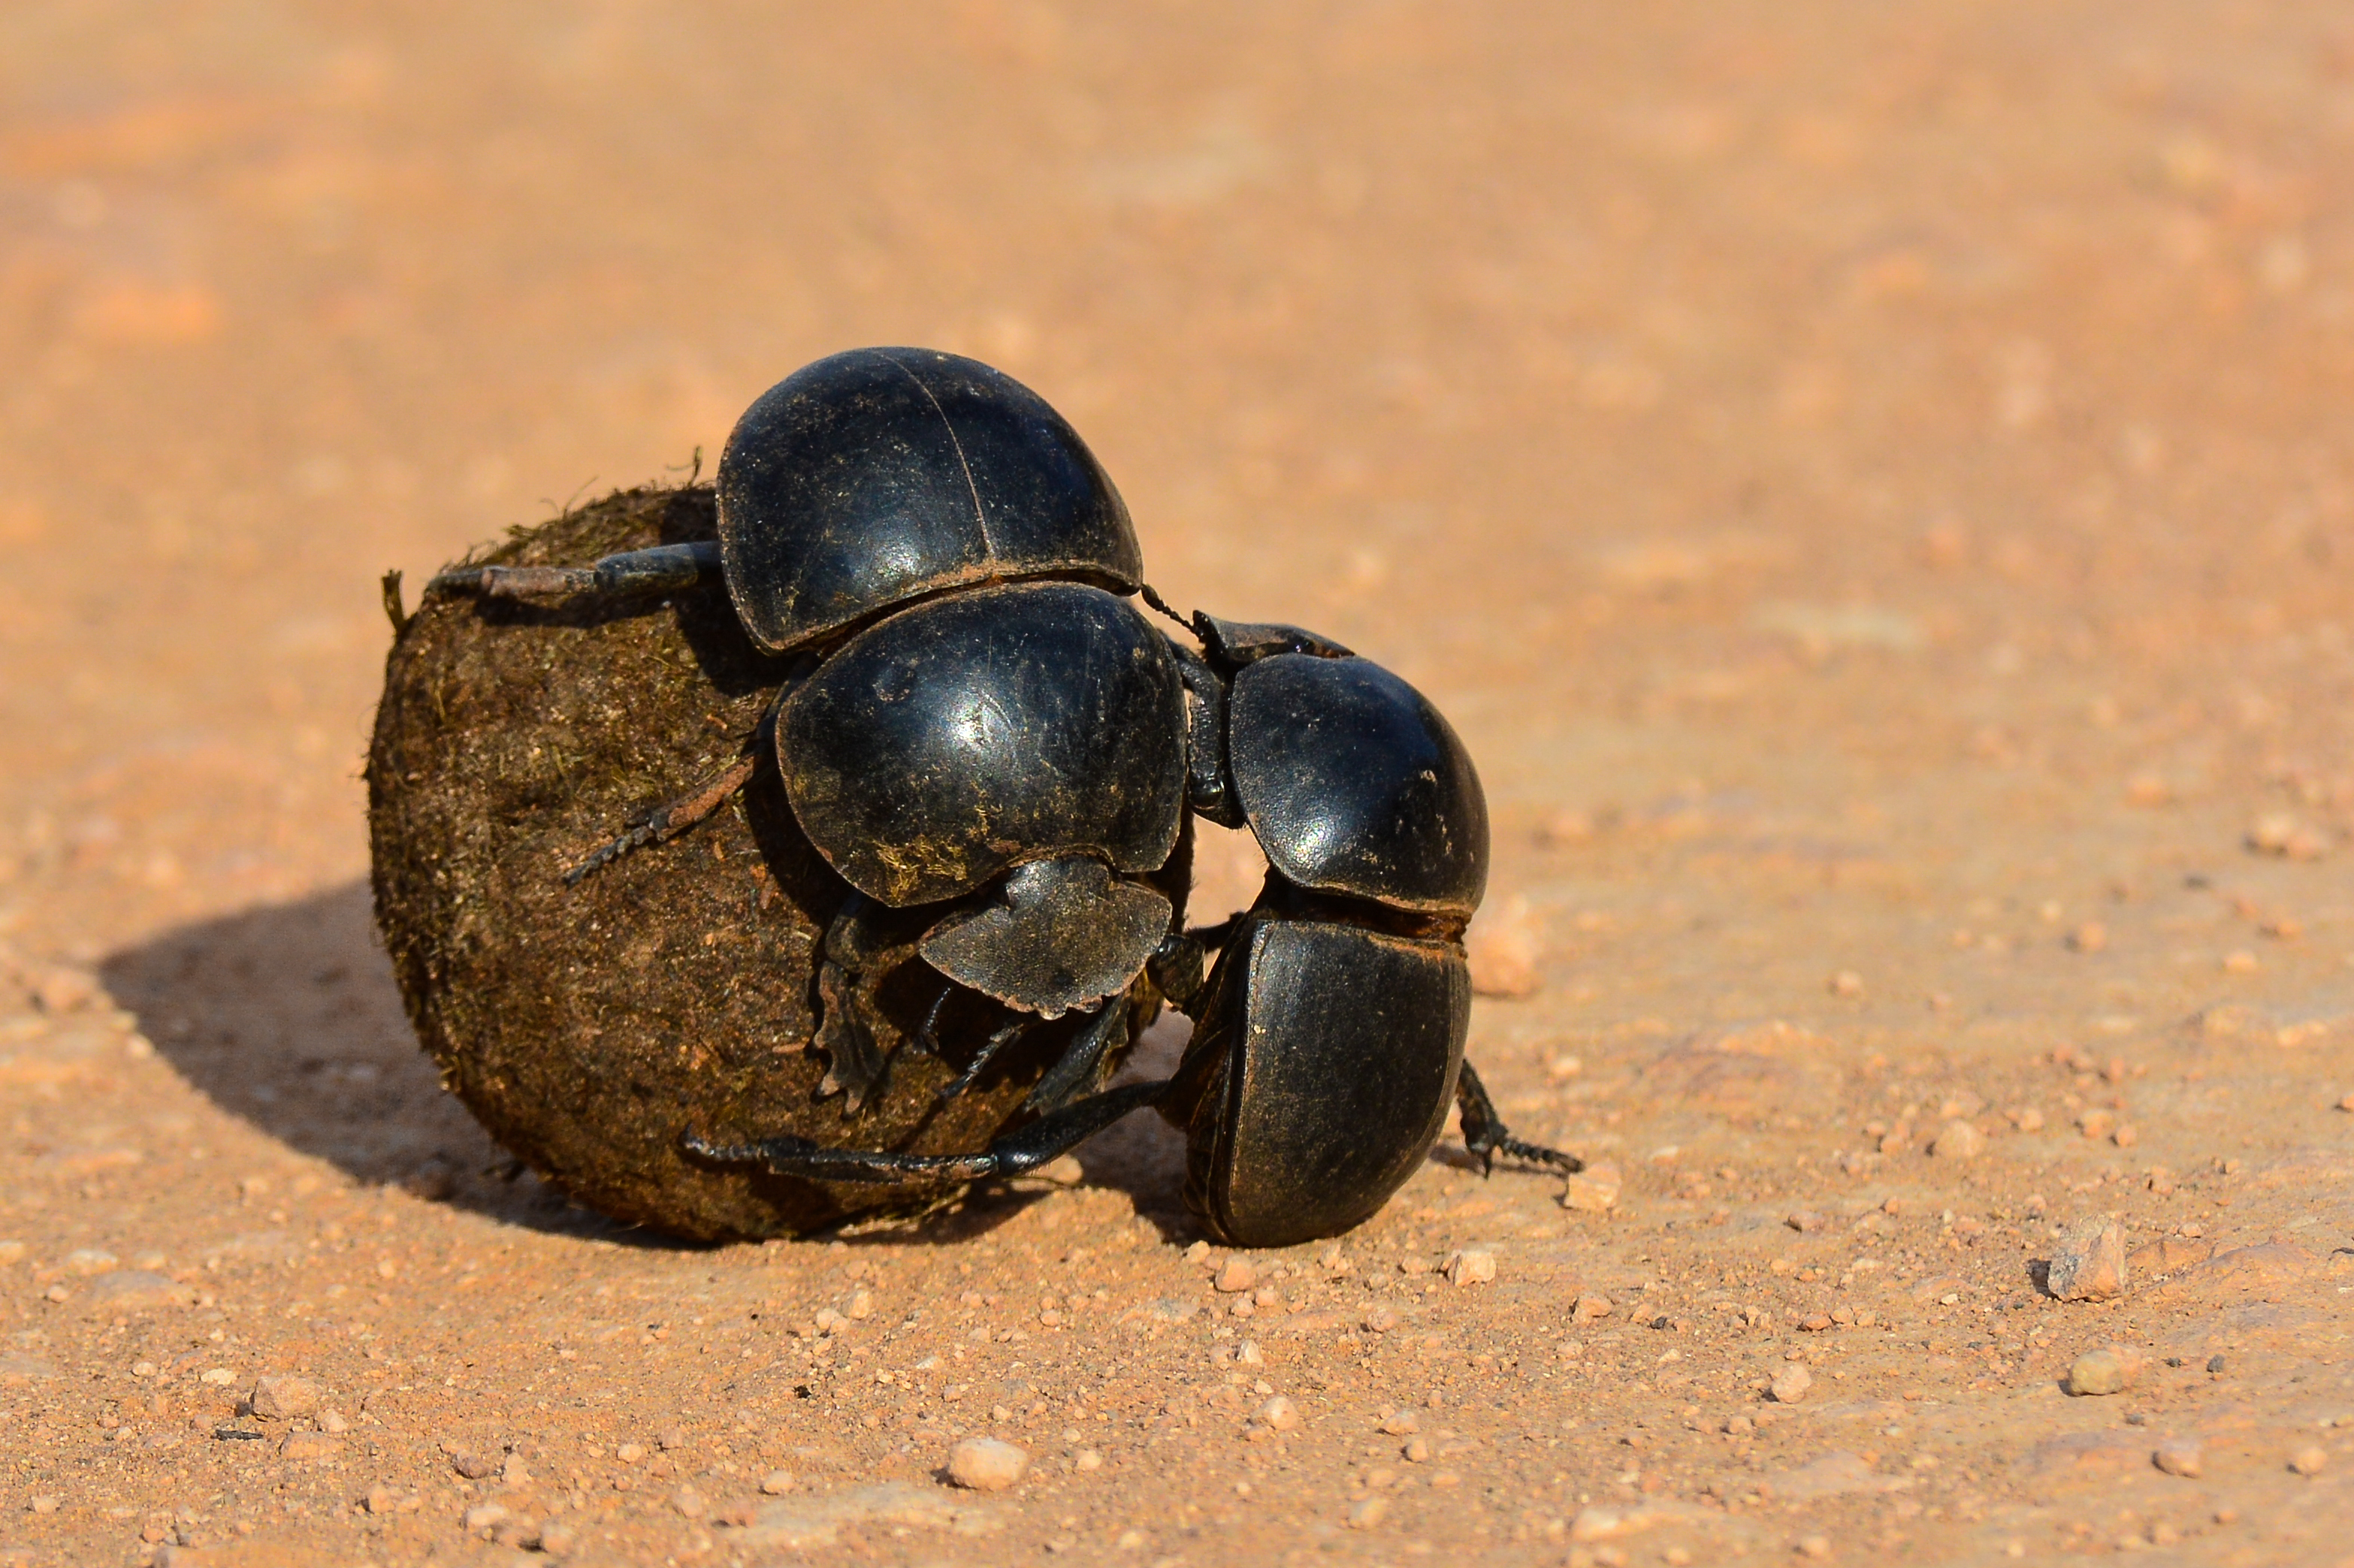 Dung beetle 